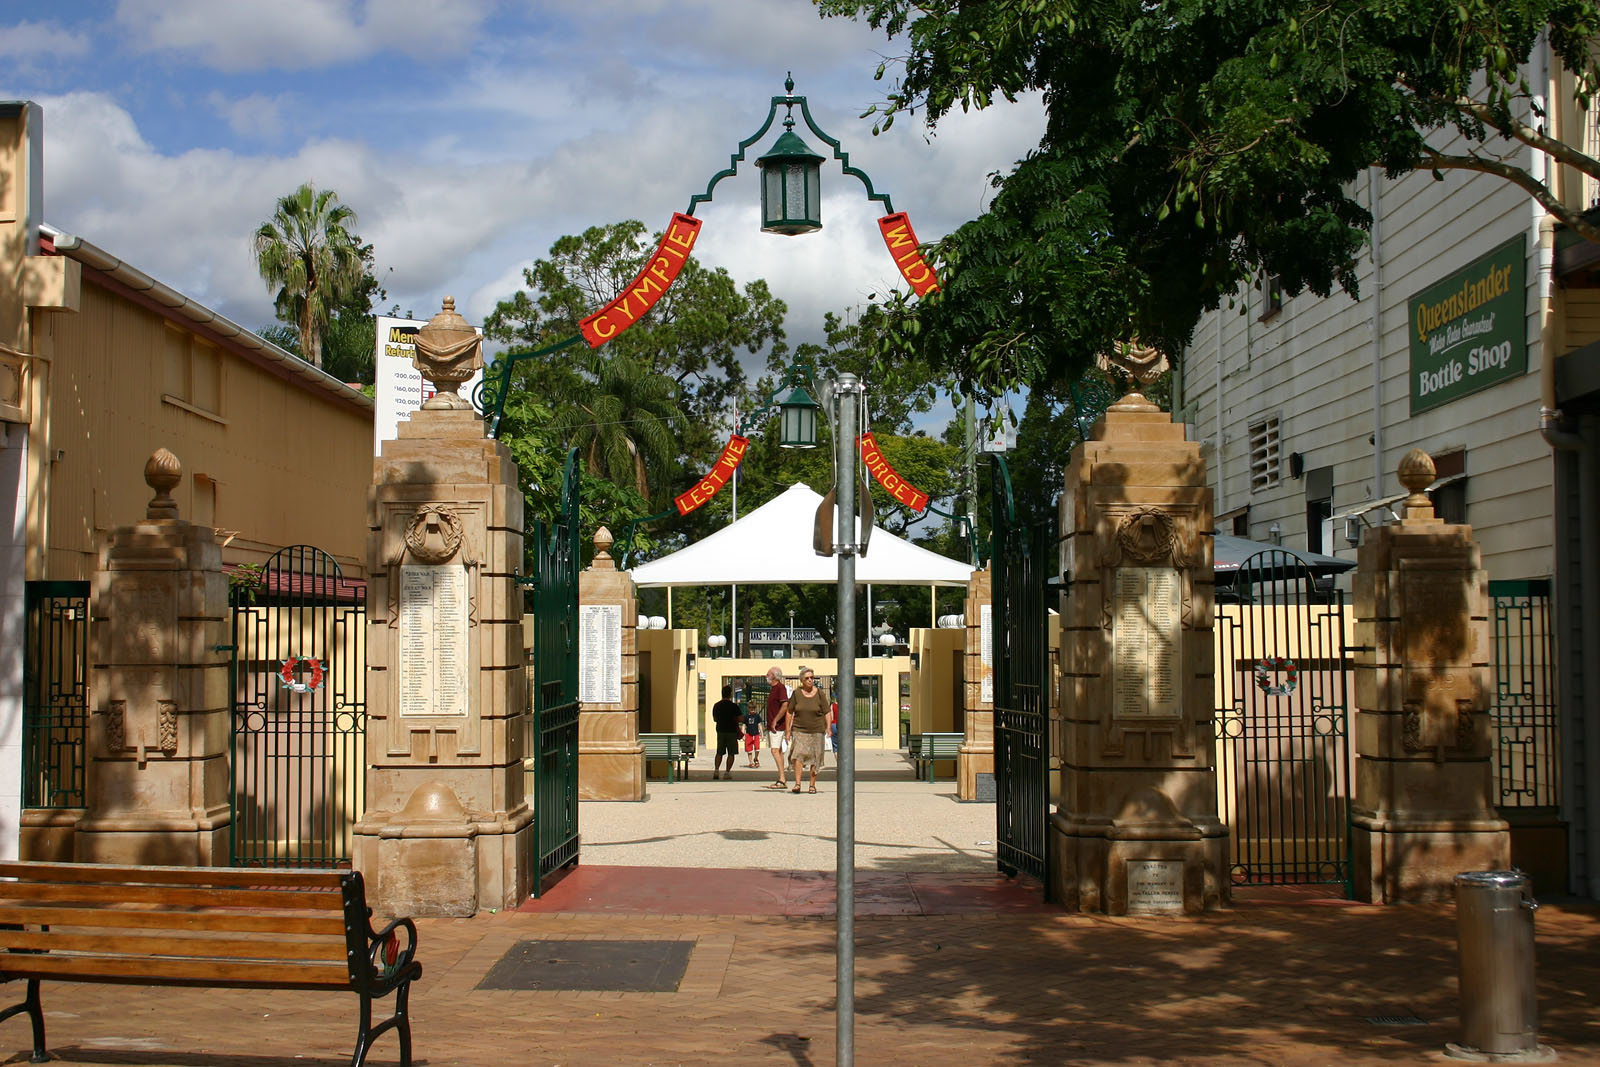 Memorial Park Gates